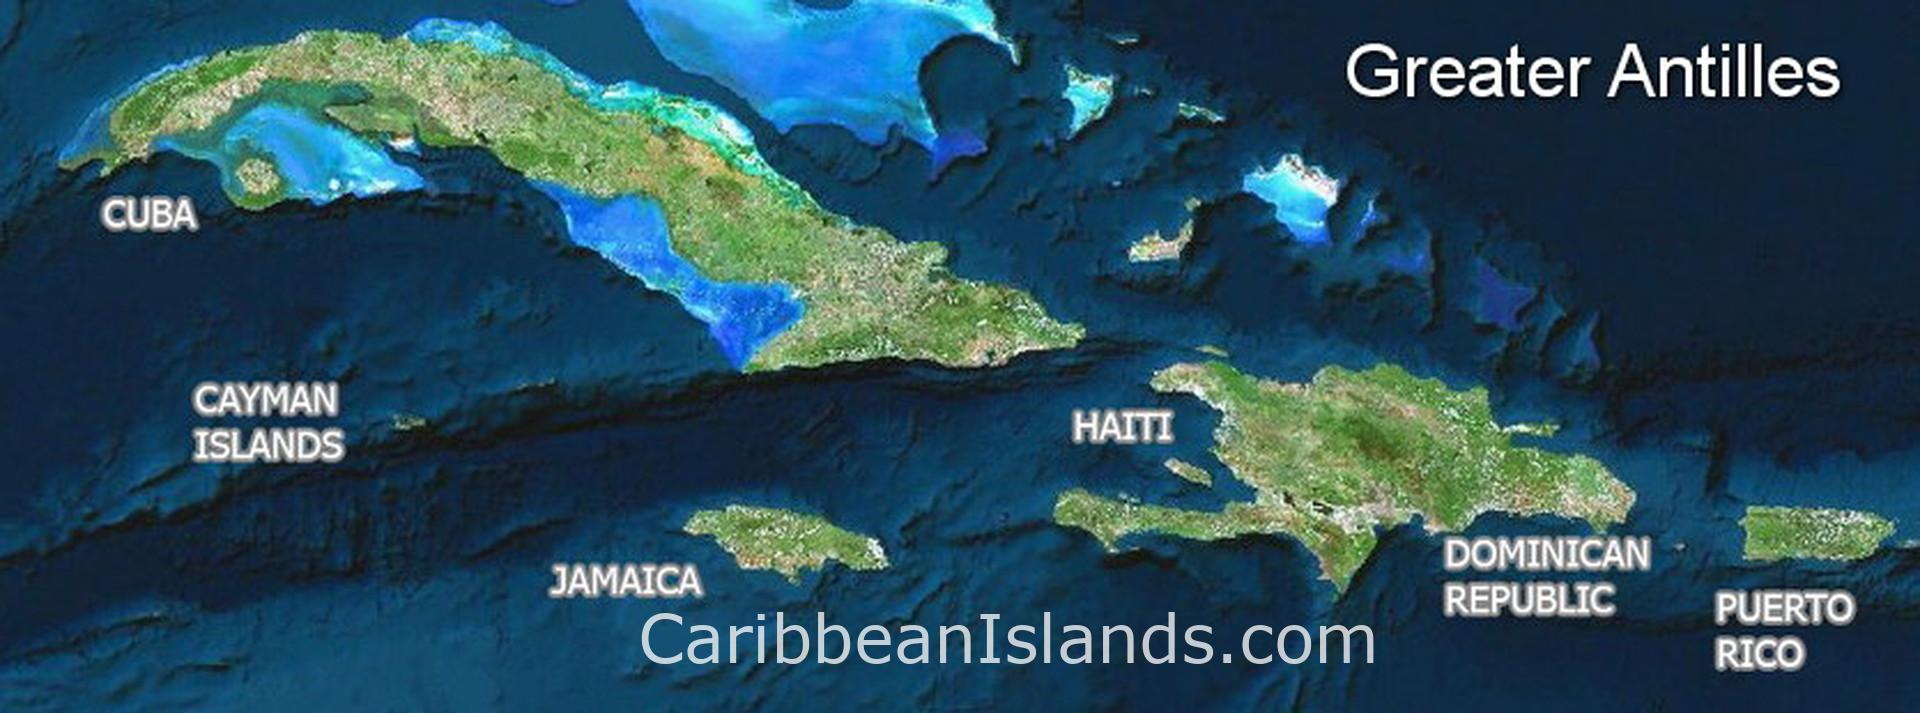 Mapa das Grandes Antilhas